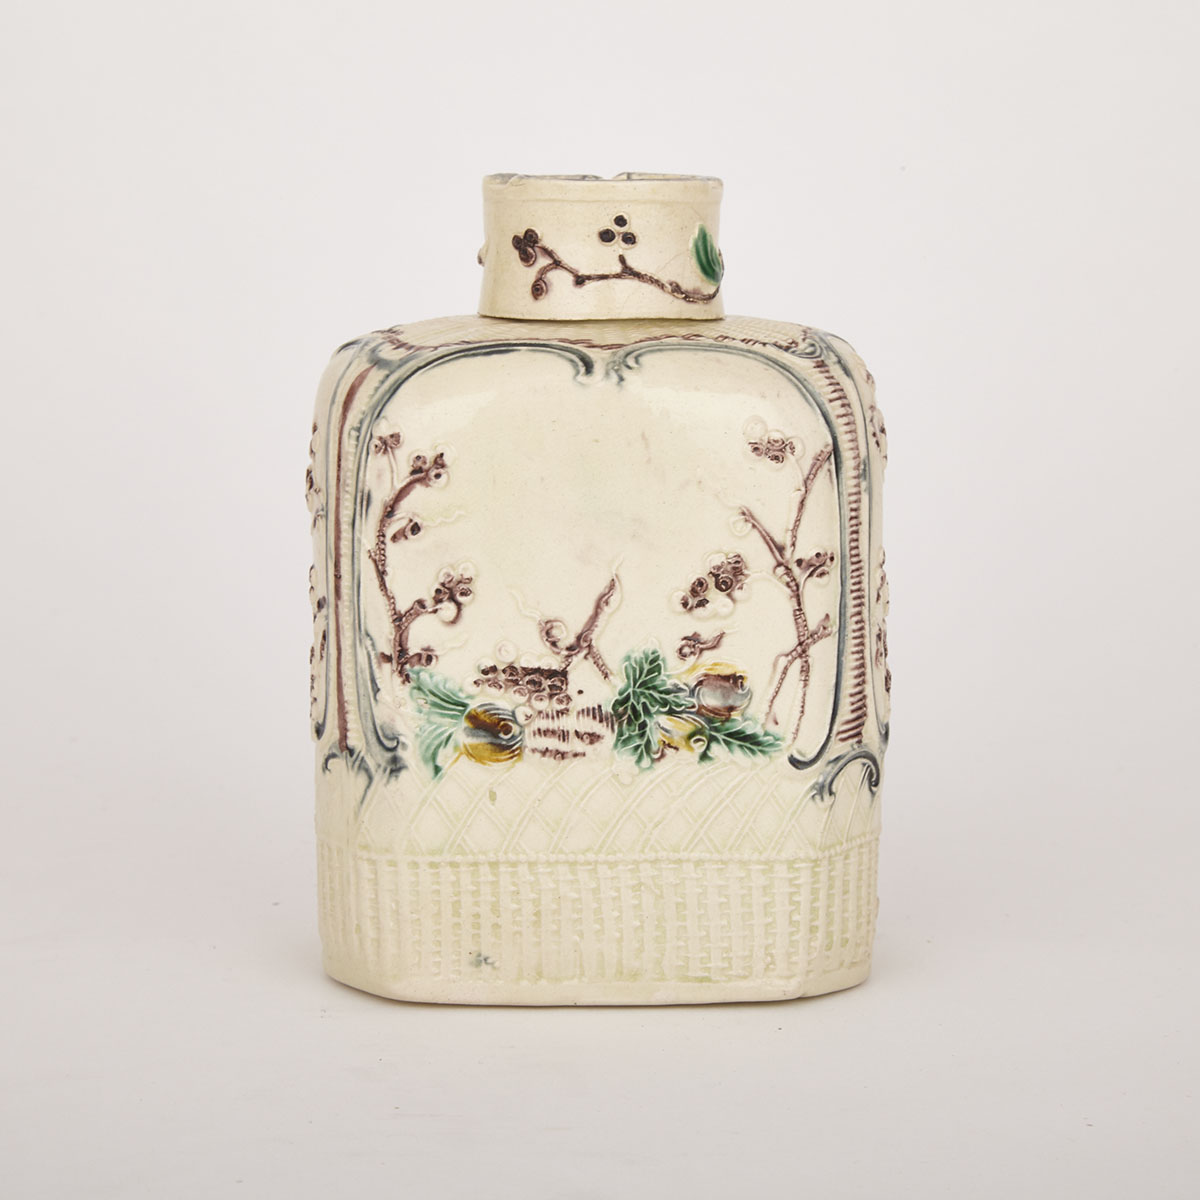 William Greatbatch Creamware Tea Caddy and Cover, c.1770